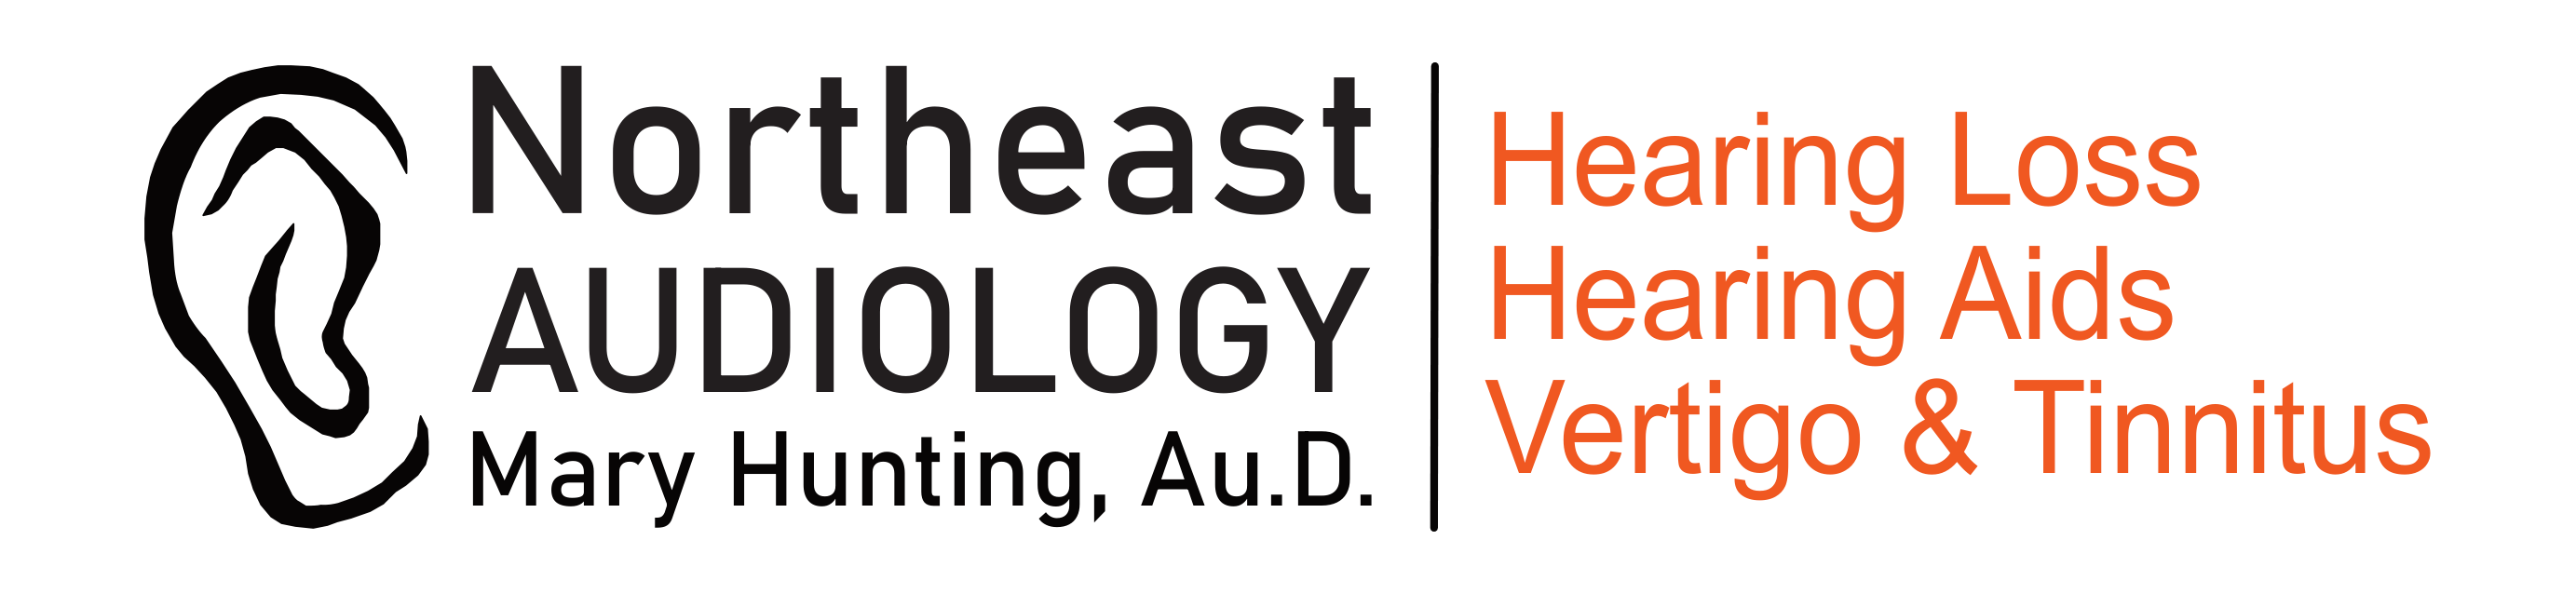 Northeast Audiology Logo - Hearing Loss, Hearing Aids, Vertigo & Tinnitus